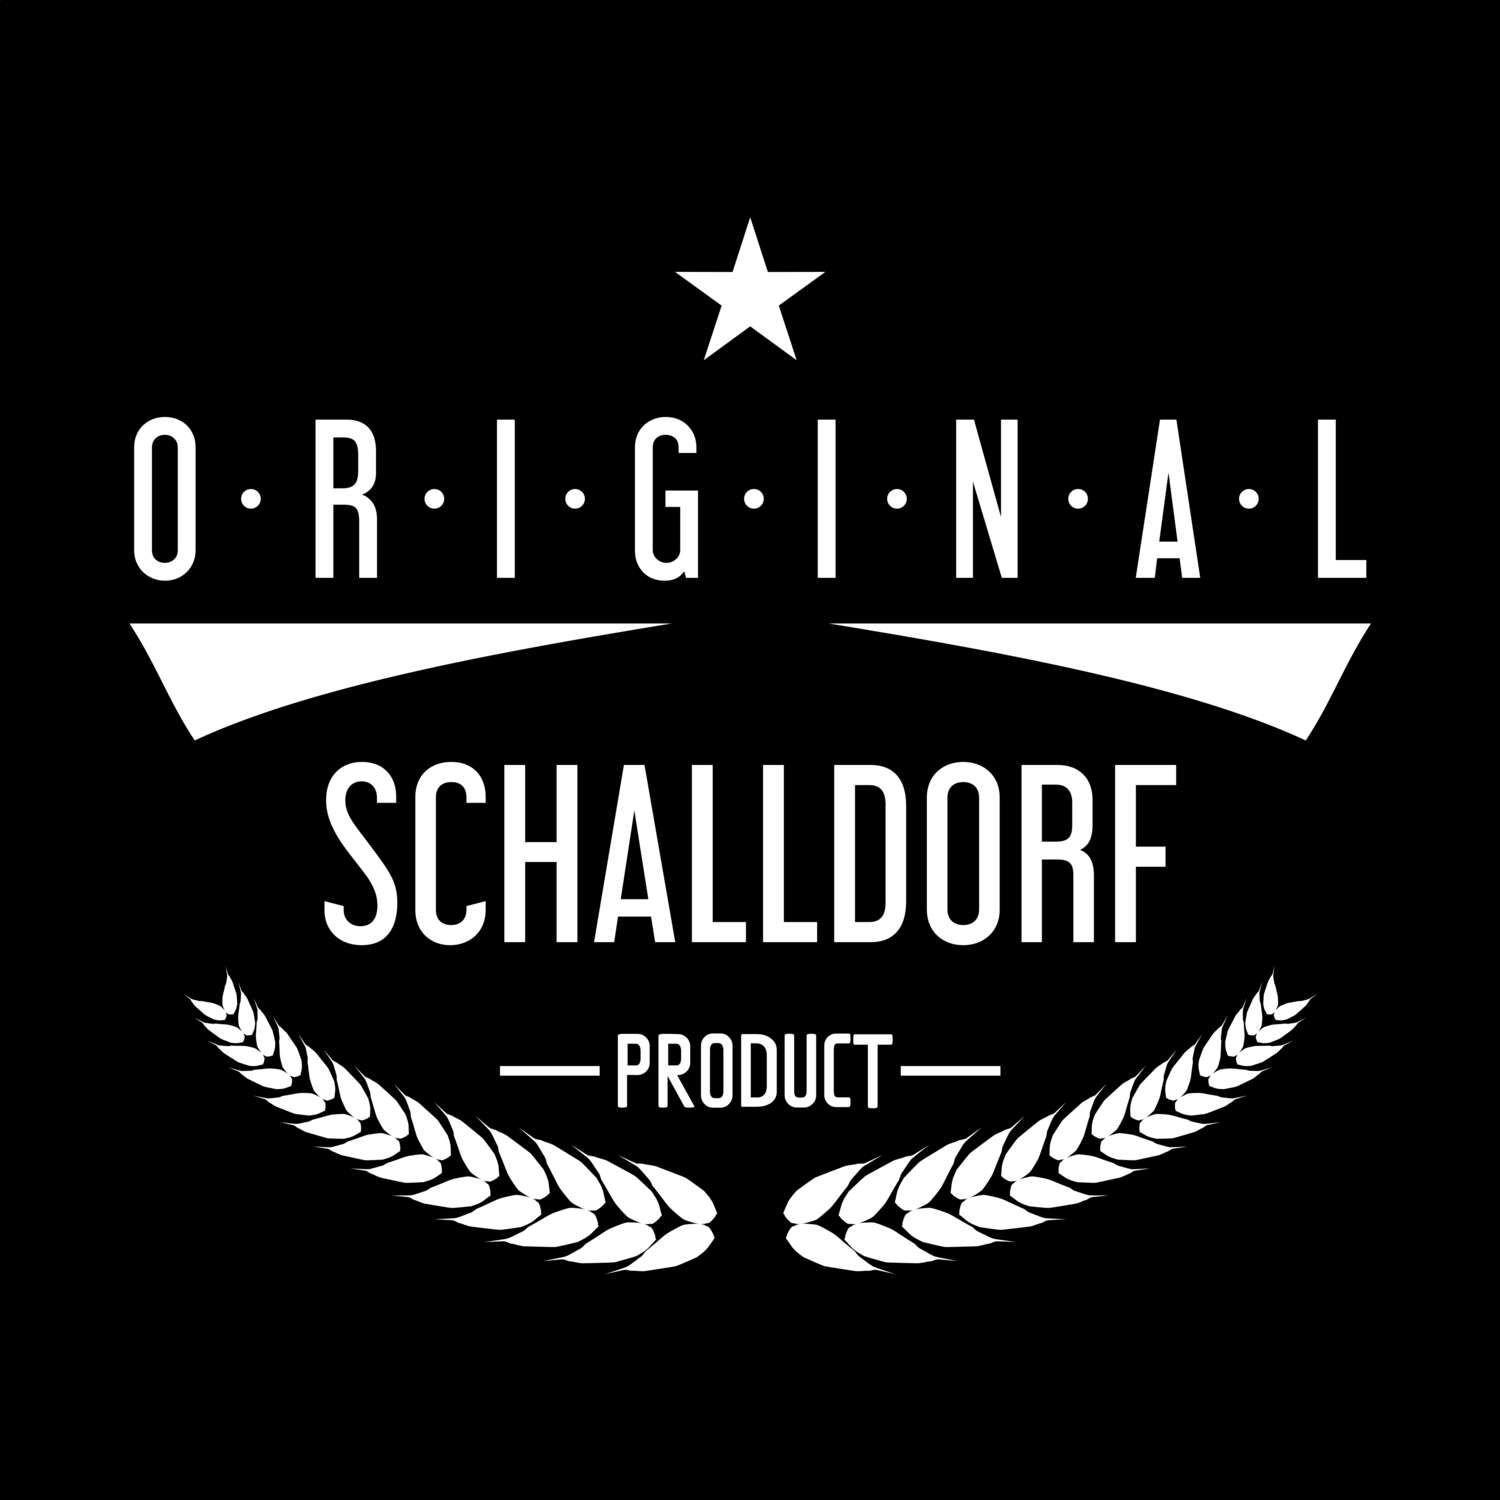 Schalldorf T-Shirt »Original Product«